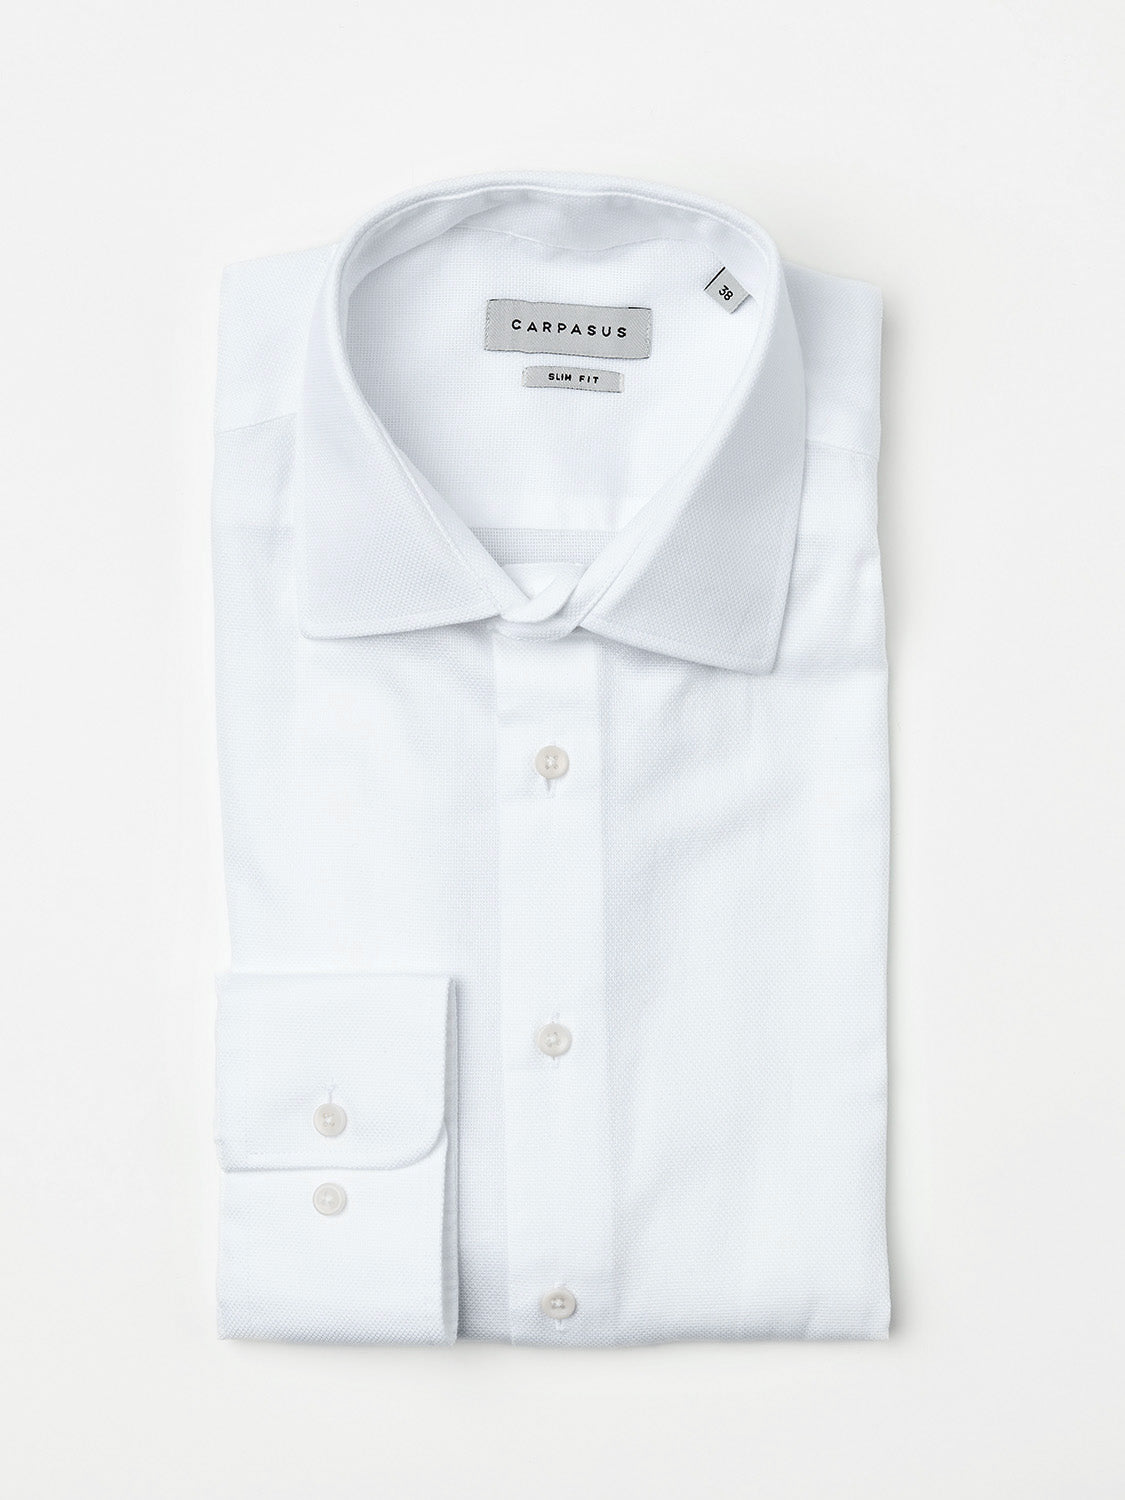 Wet en regelgeving Controverse Bedankt Sustainable Dress Shirt from Organic Cotton Slim Fit Porto White - CARPASUS  Online Store